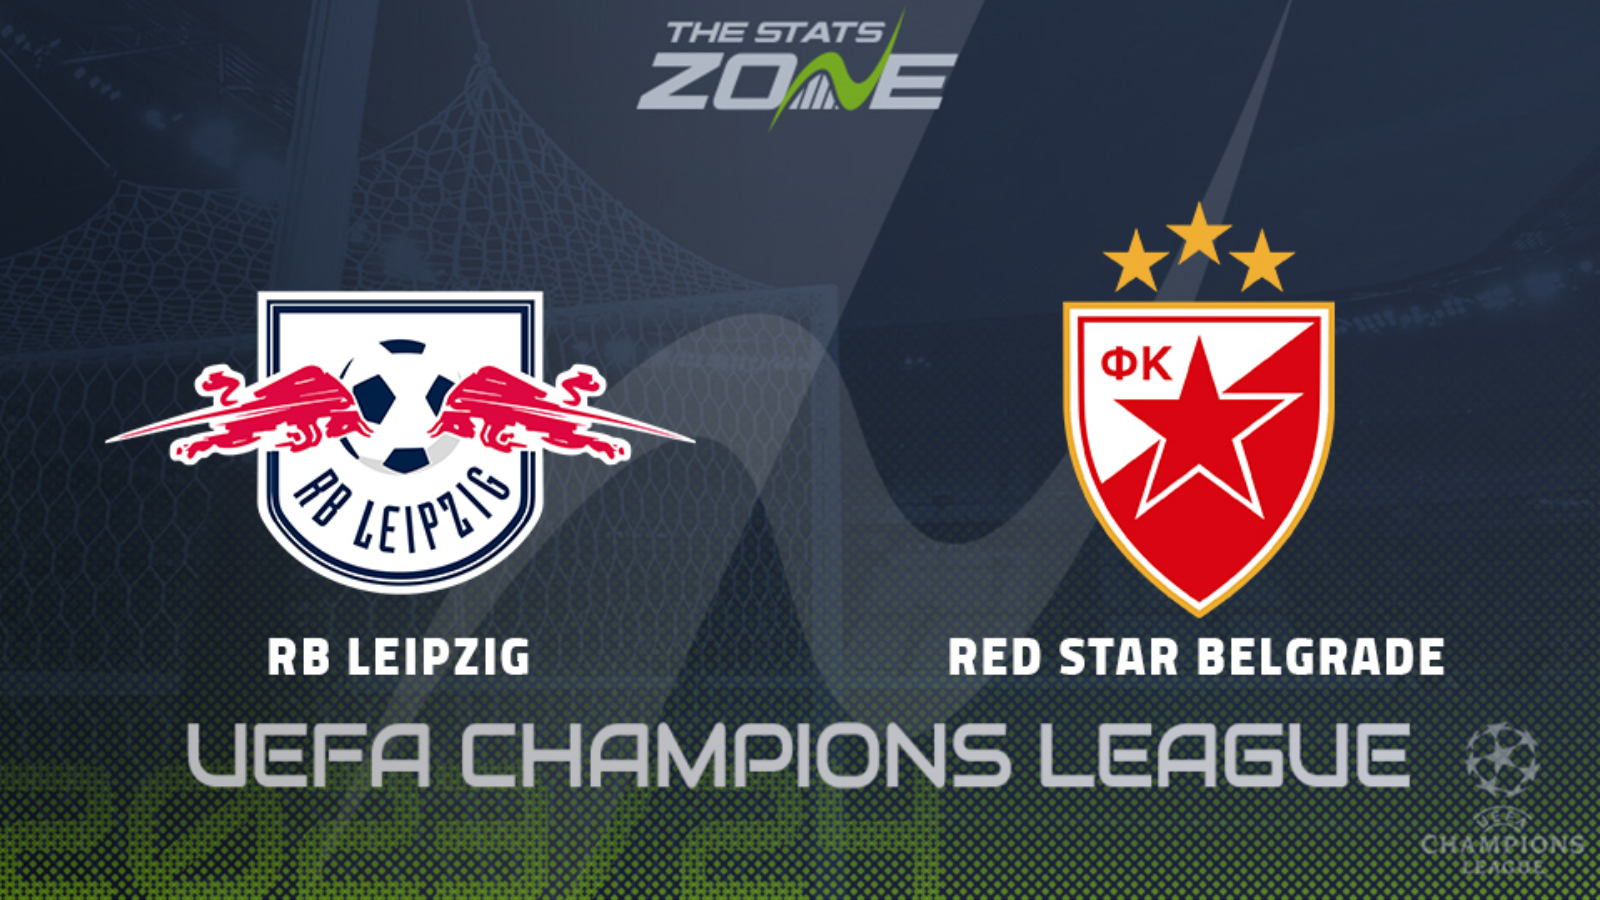 Crvena Zvezda lose out to RB Leipzig 